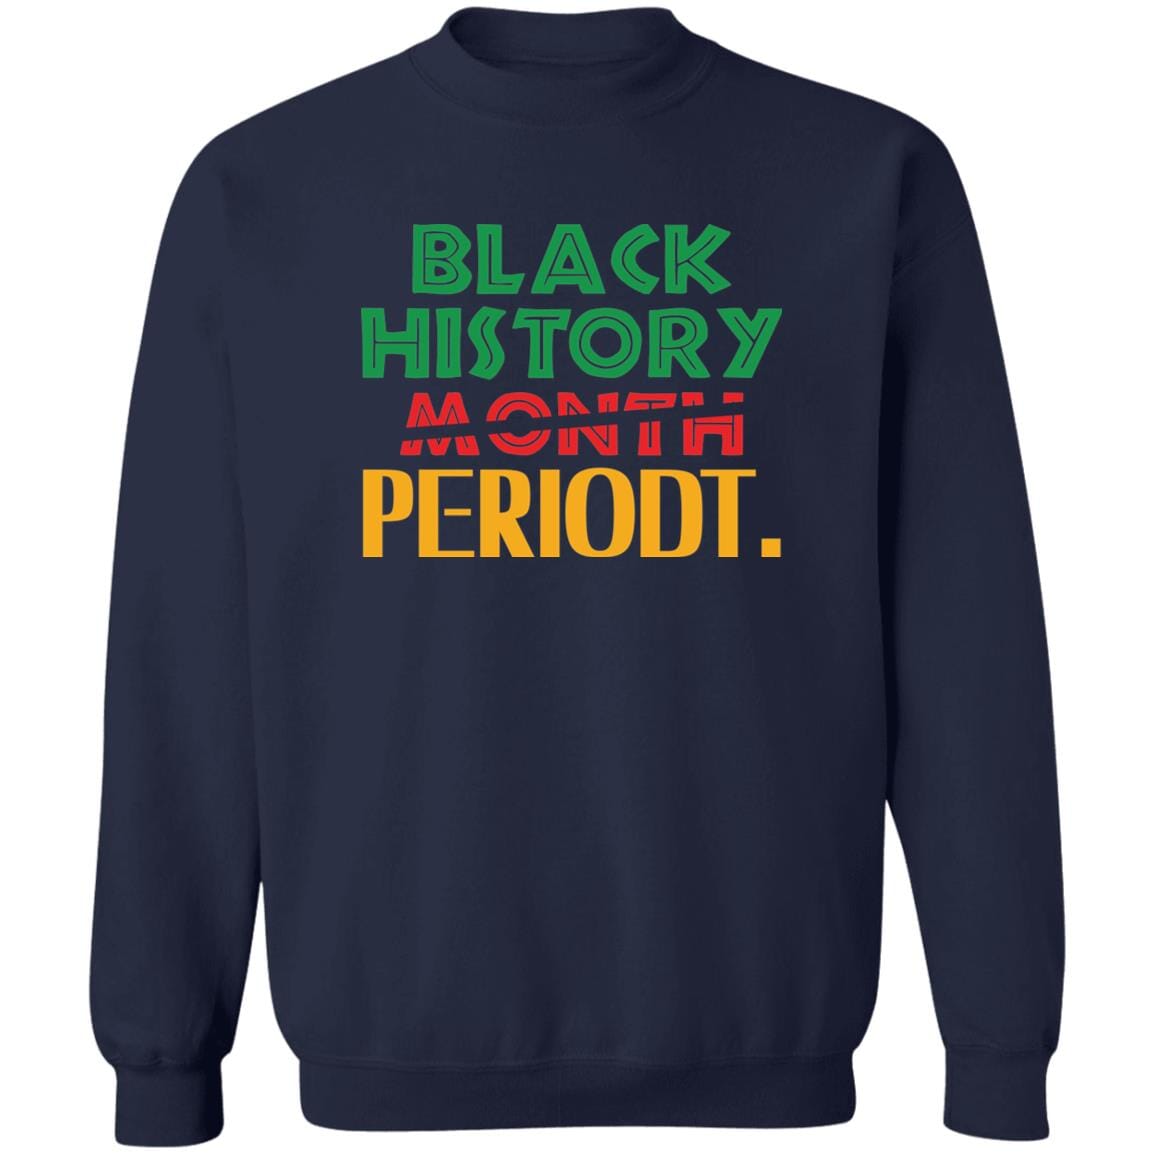 Black History Month Periodt. T-shirt Apparel Gearment Crewneck Sweatshirt Navy S